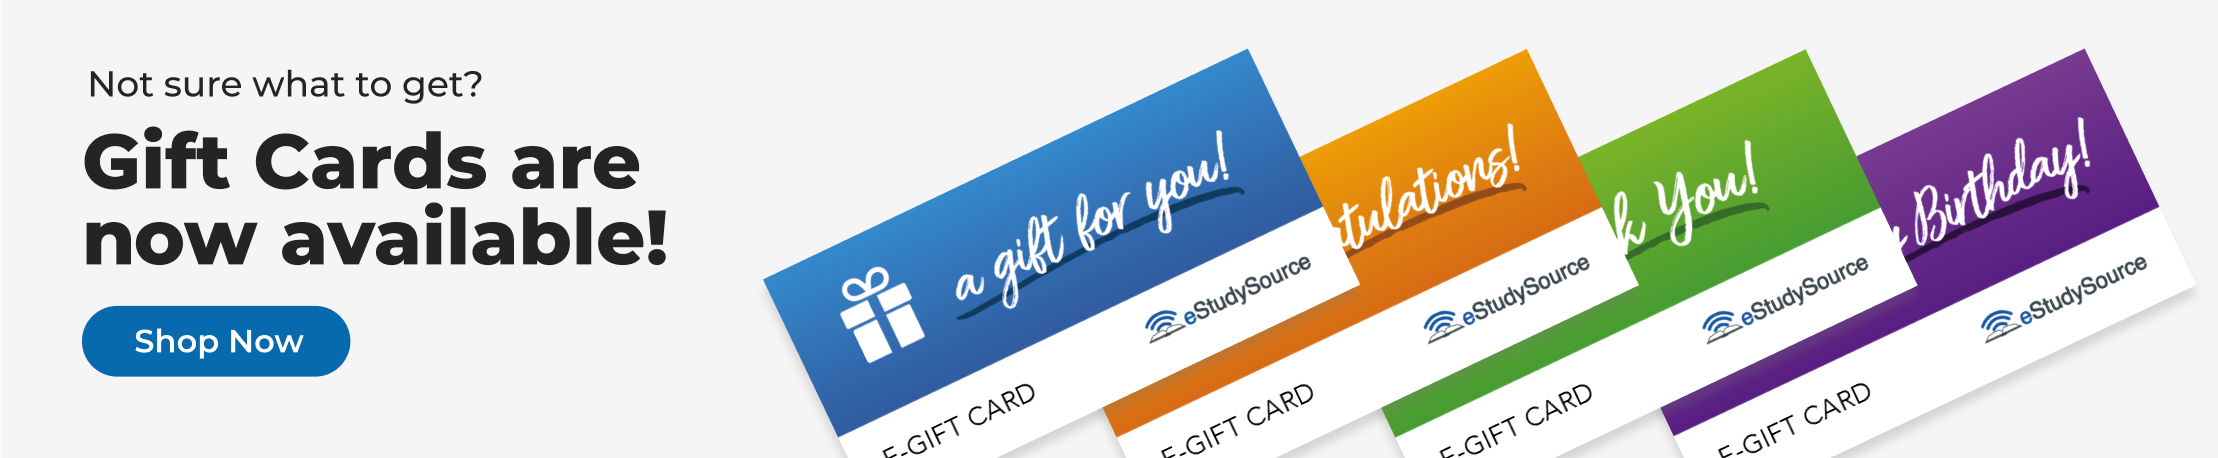 eStudySource Gift Cards